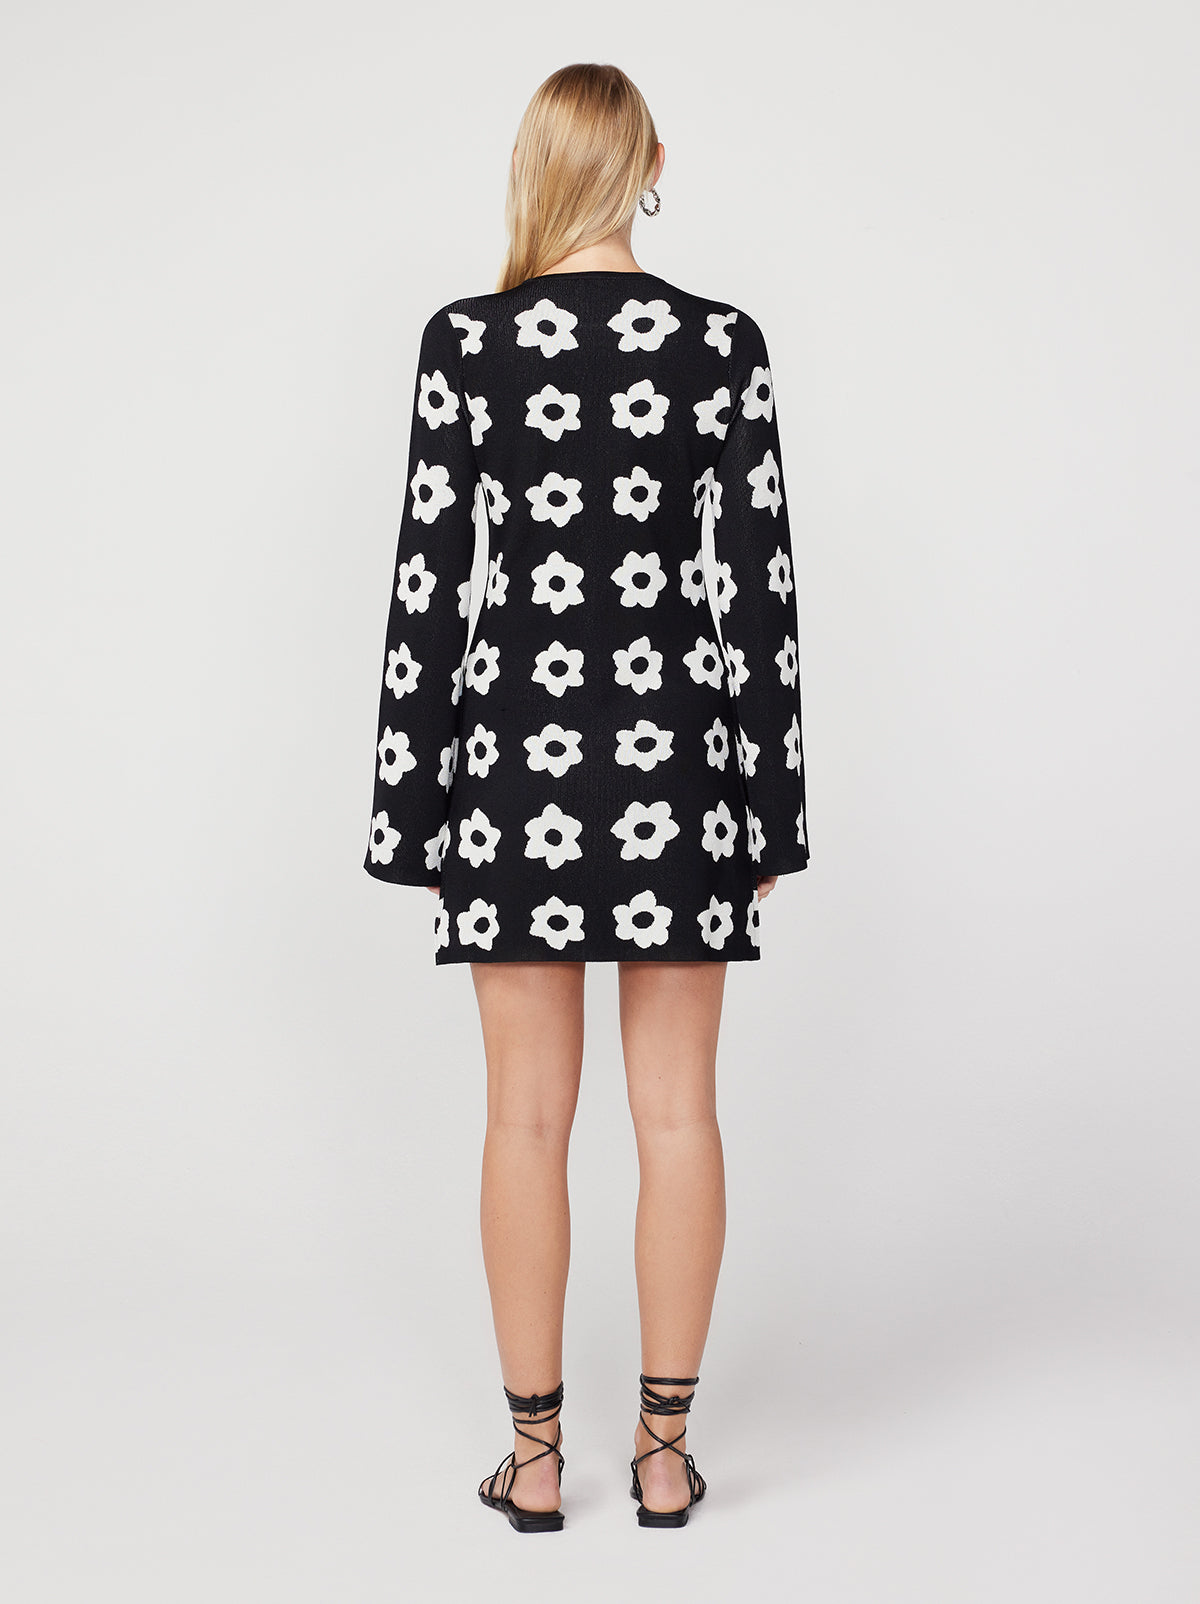 Greta Black Tiled Floral Knit Mini Dress By KITRI Studio